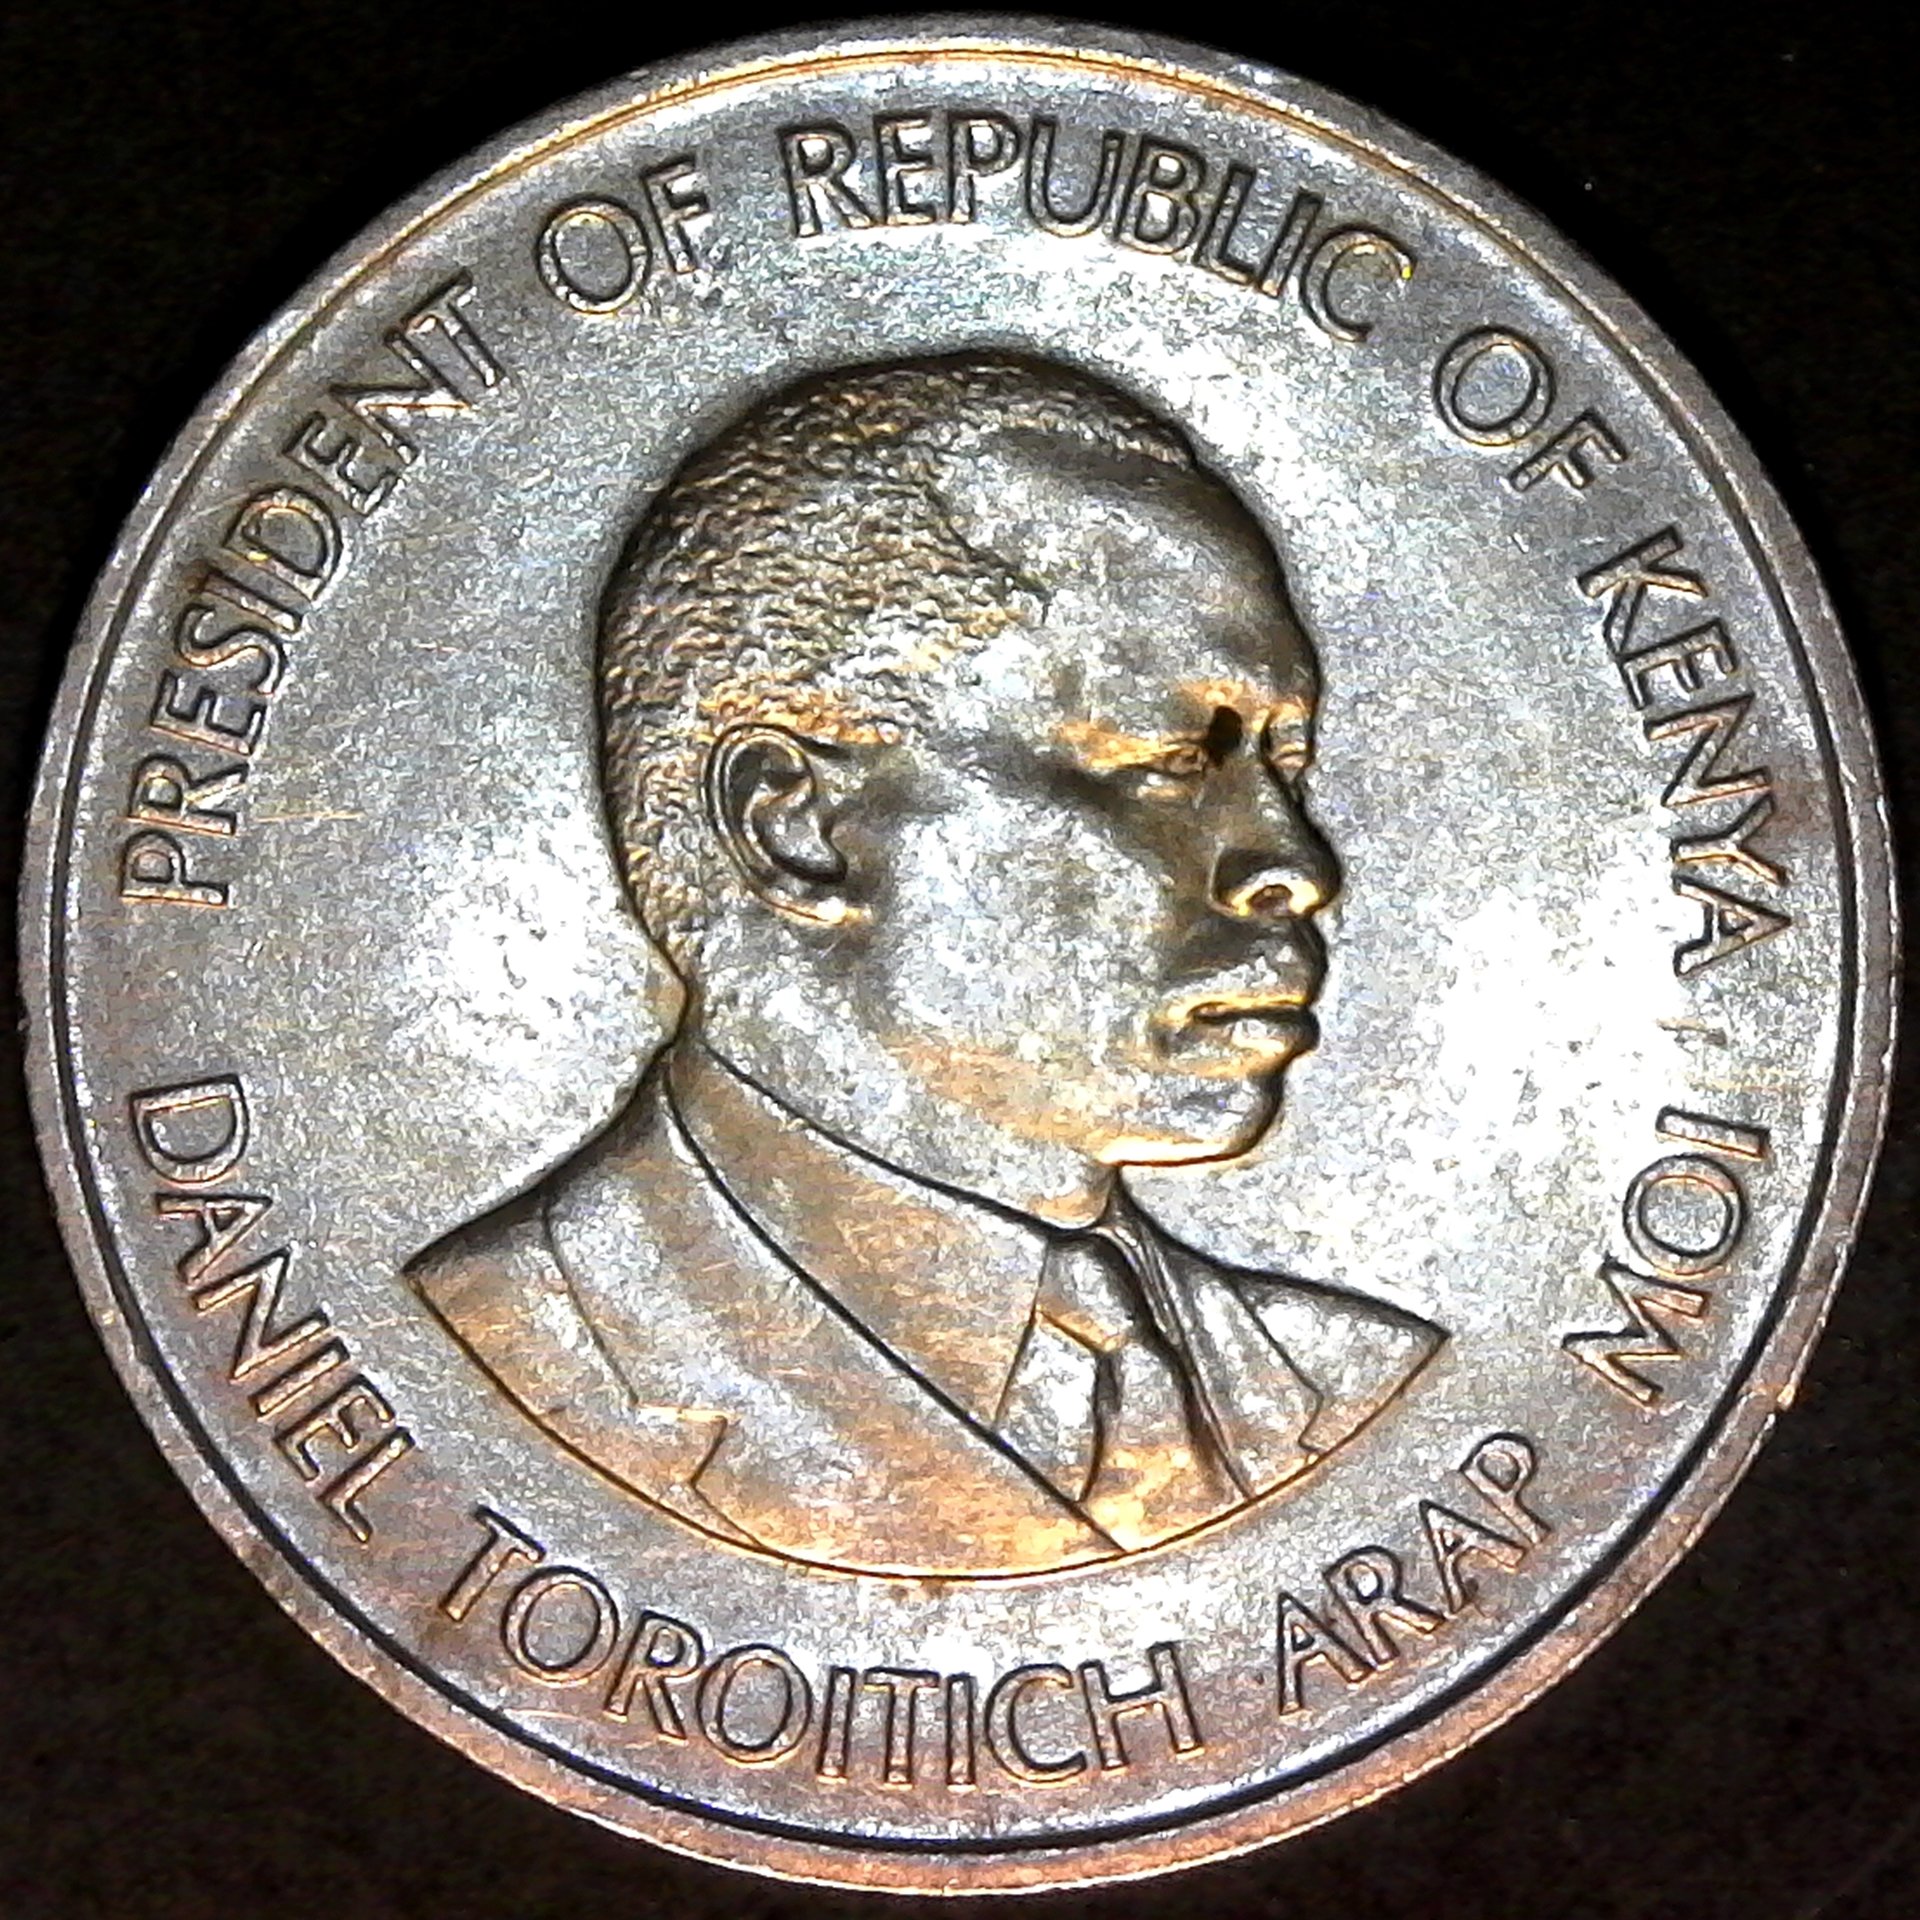 Kenya 1 Shilling 1989 rev.jpg